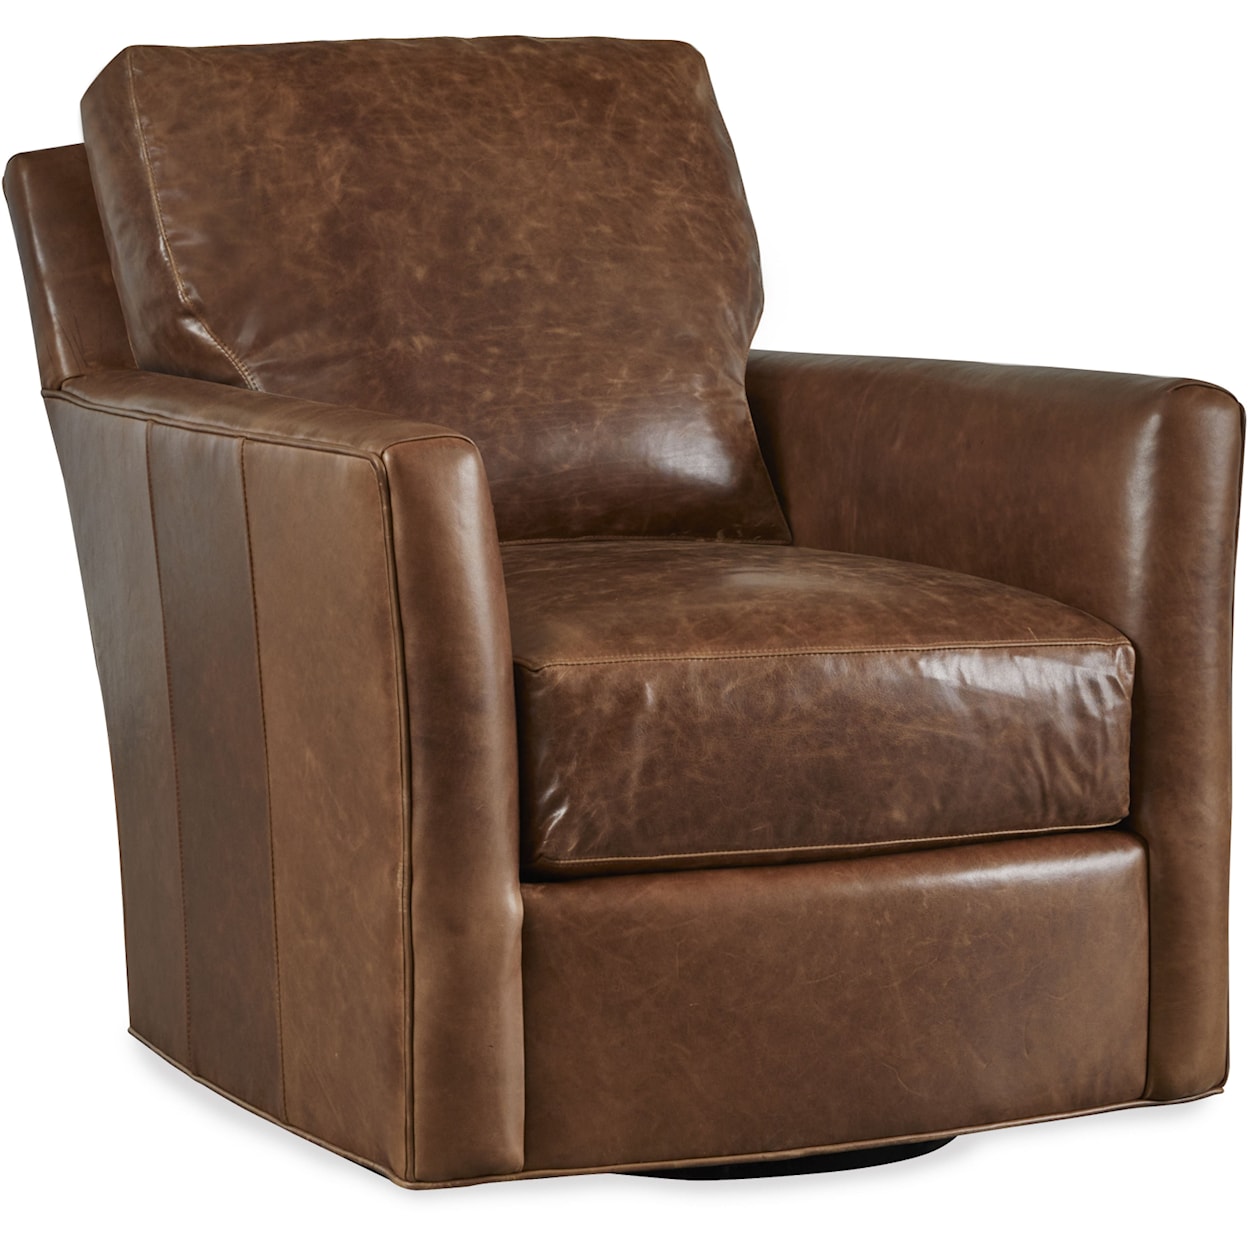 C.R. Laine Murphey Murphey Leather Swivel  Chair